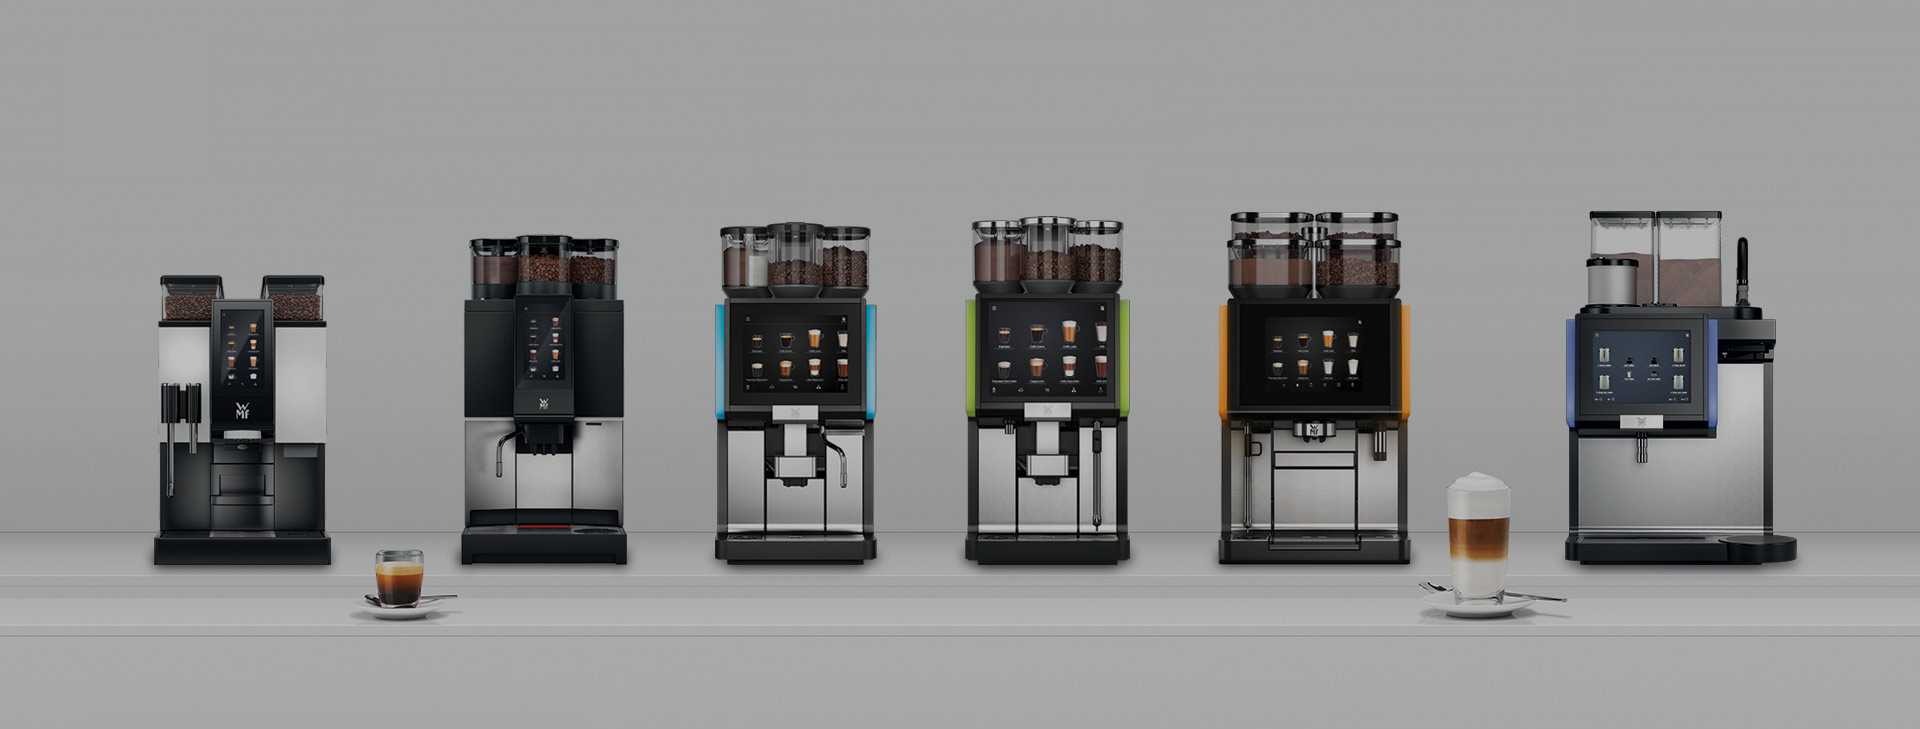 WMF 9000S+ Coffee Machine - Green Farm Coffee Company